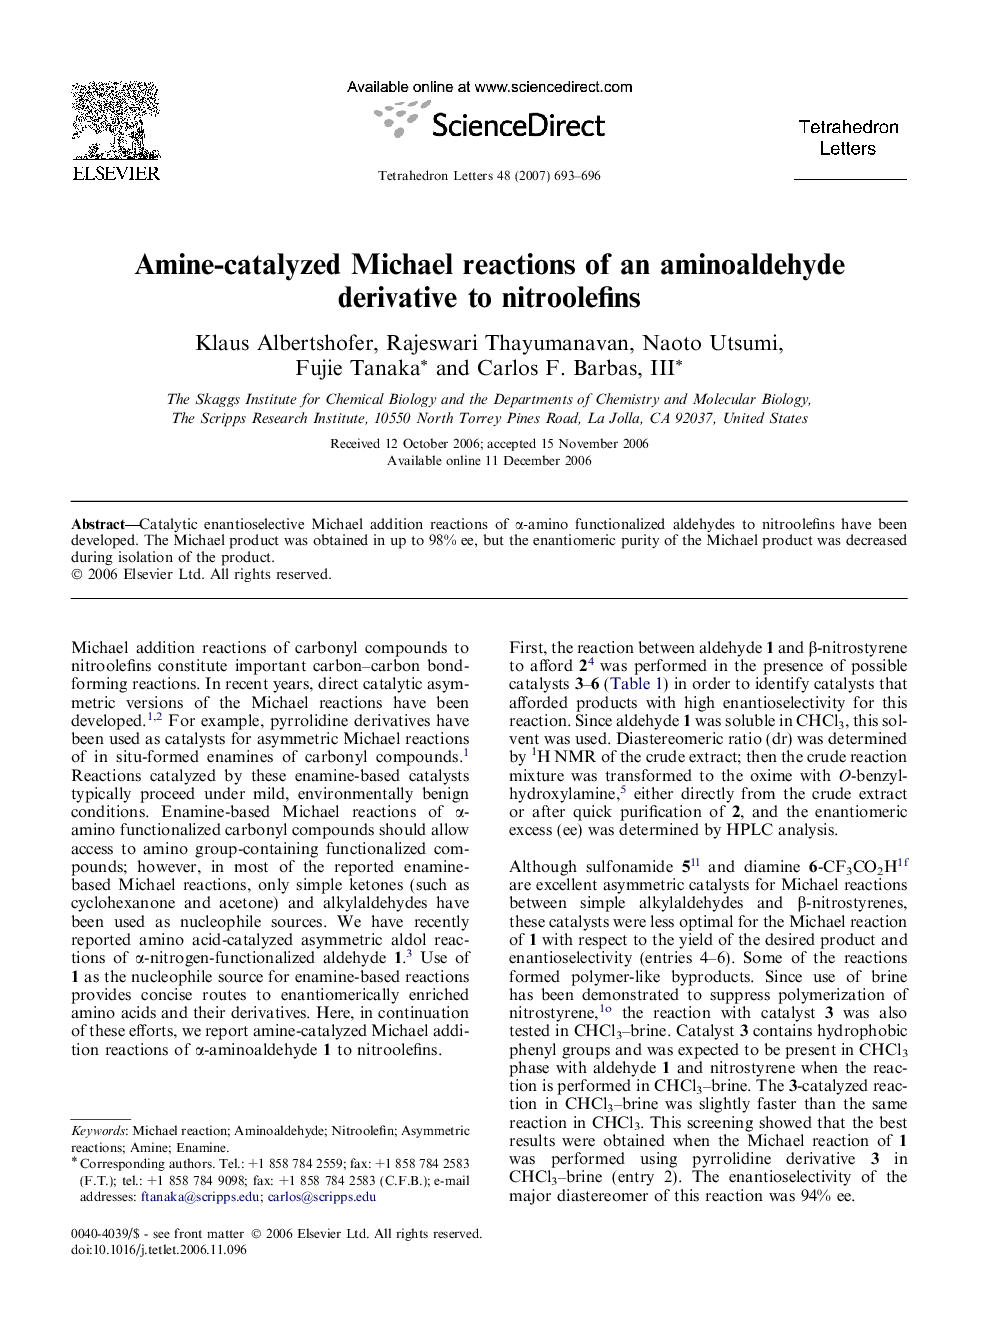 Amine-catalyzed Michael reactions of an aminoaldehyde derivative to nitroolefins